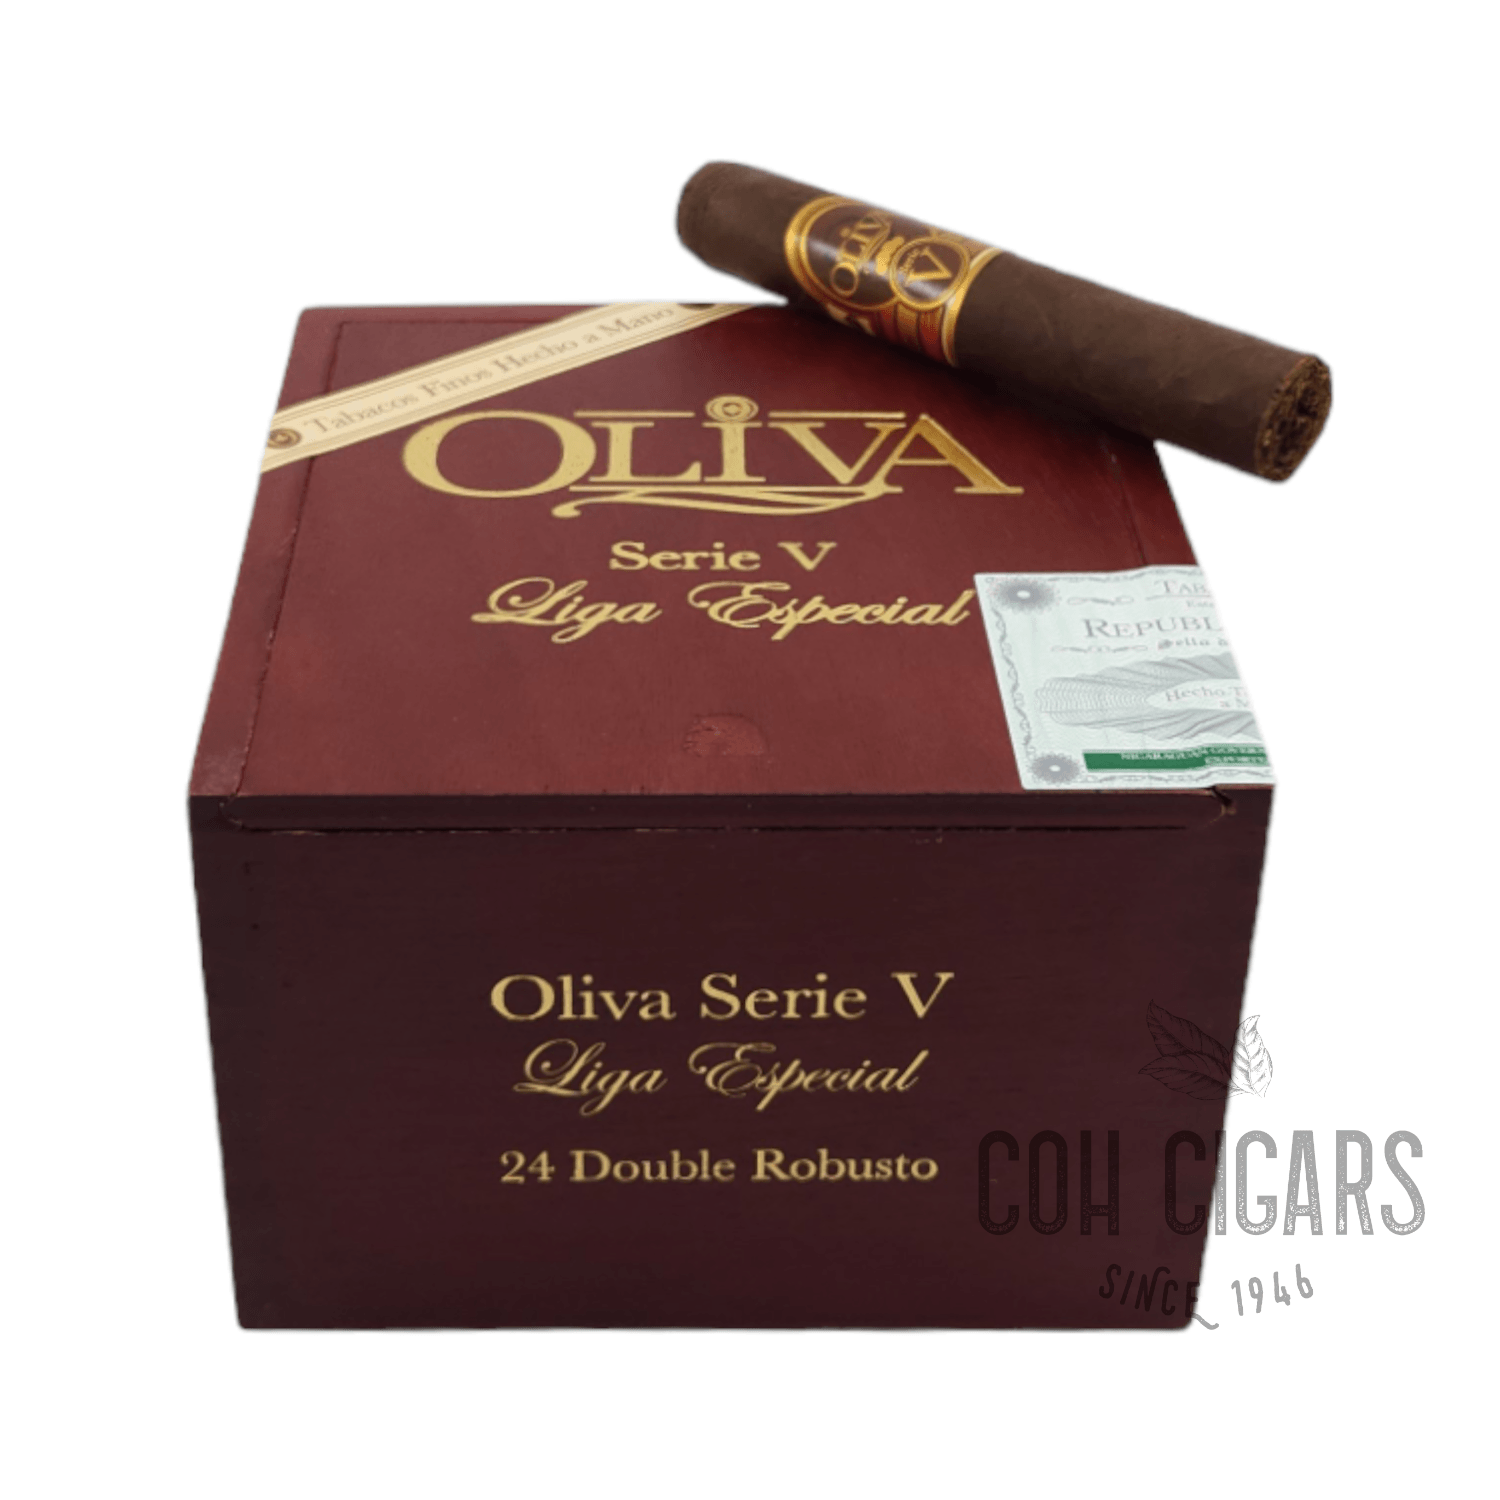 Oliva Serie V Double Robusto Box 24 - hk.cohcigars